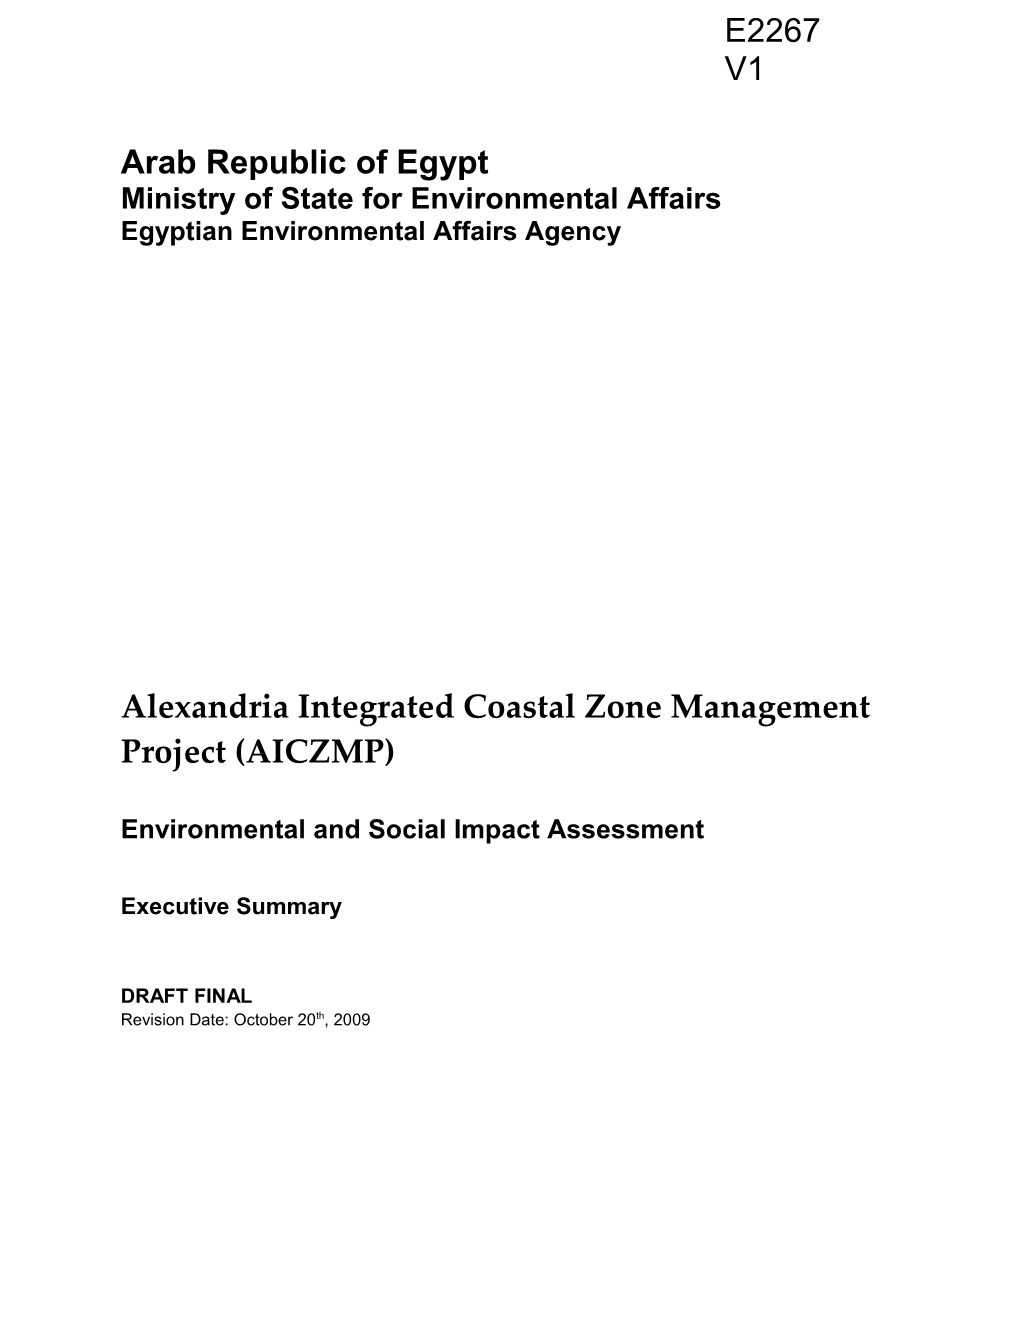 Alexandria Integrated Coastal Zone